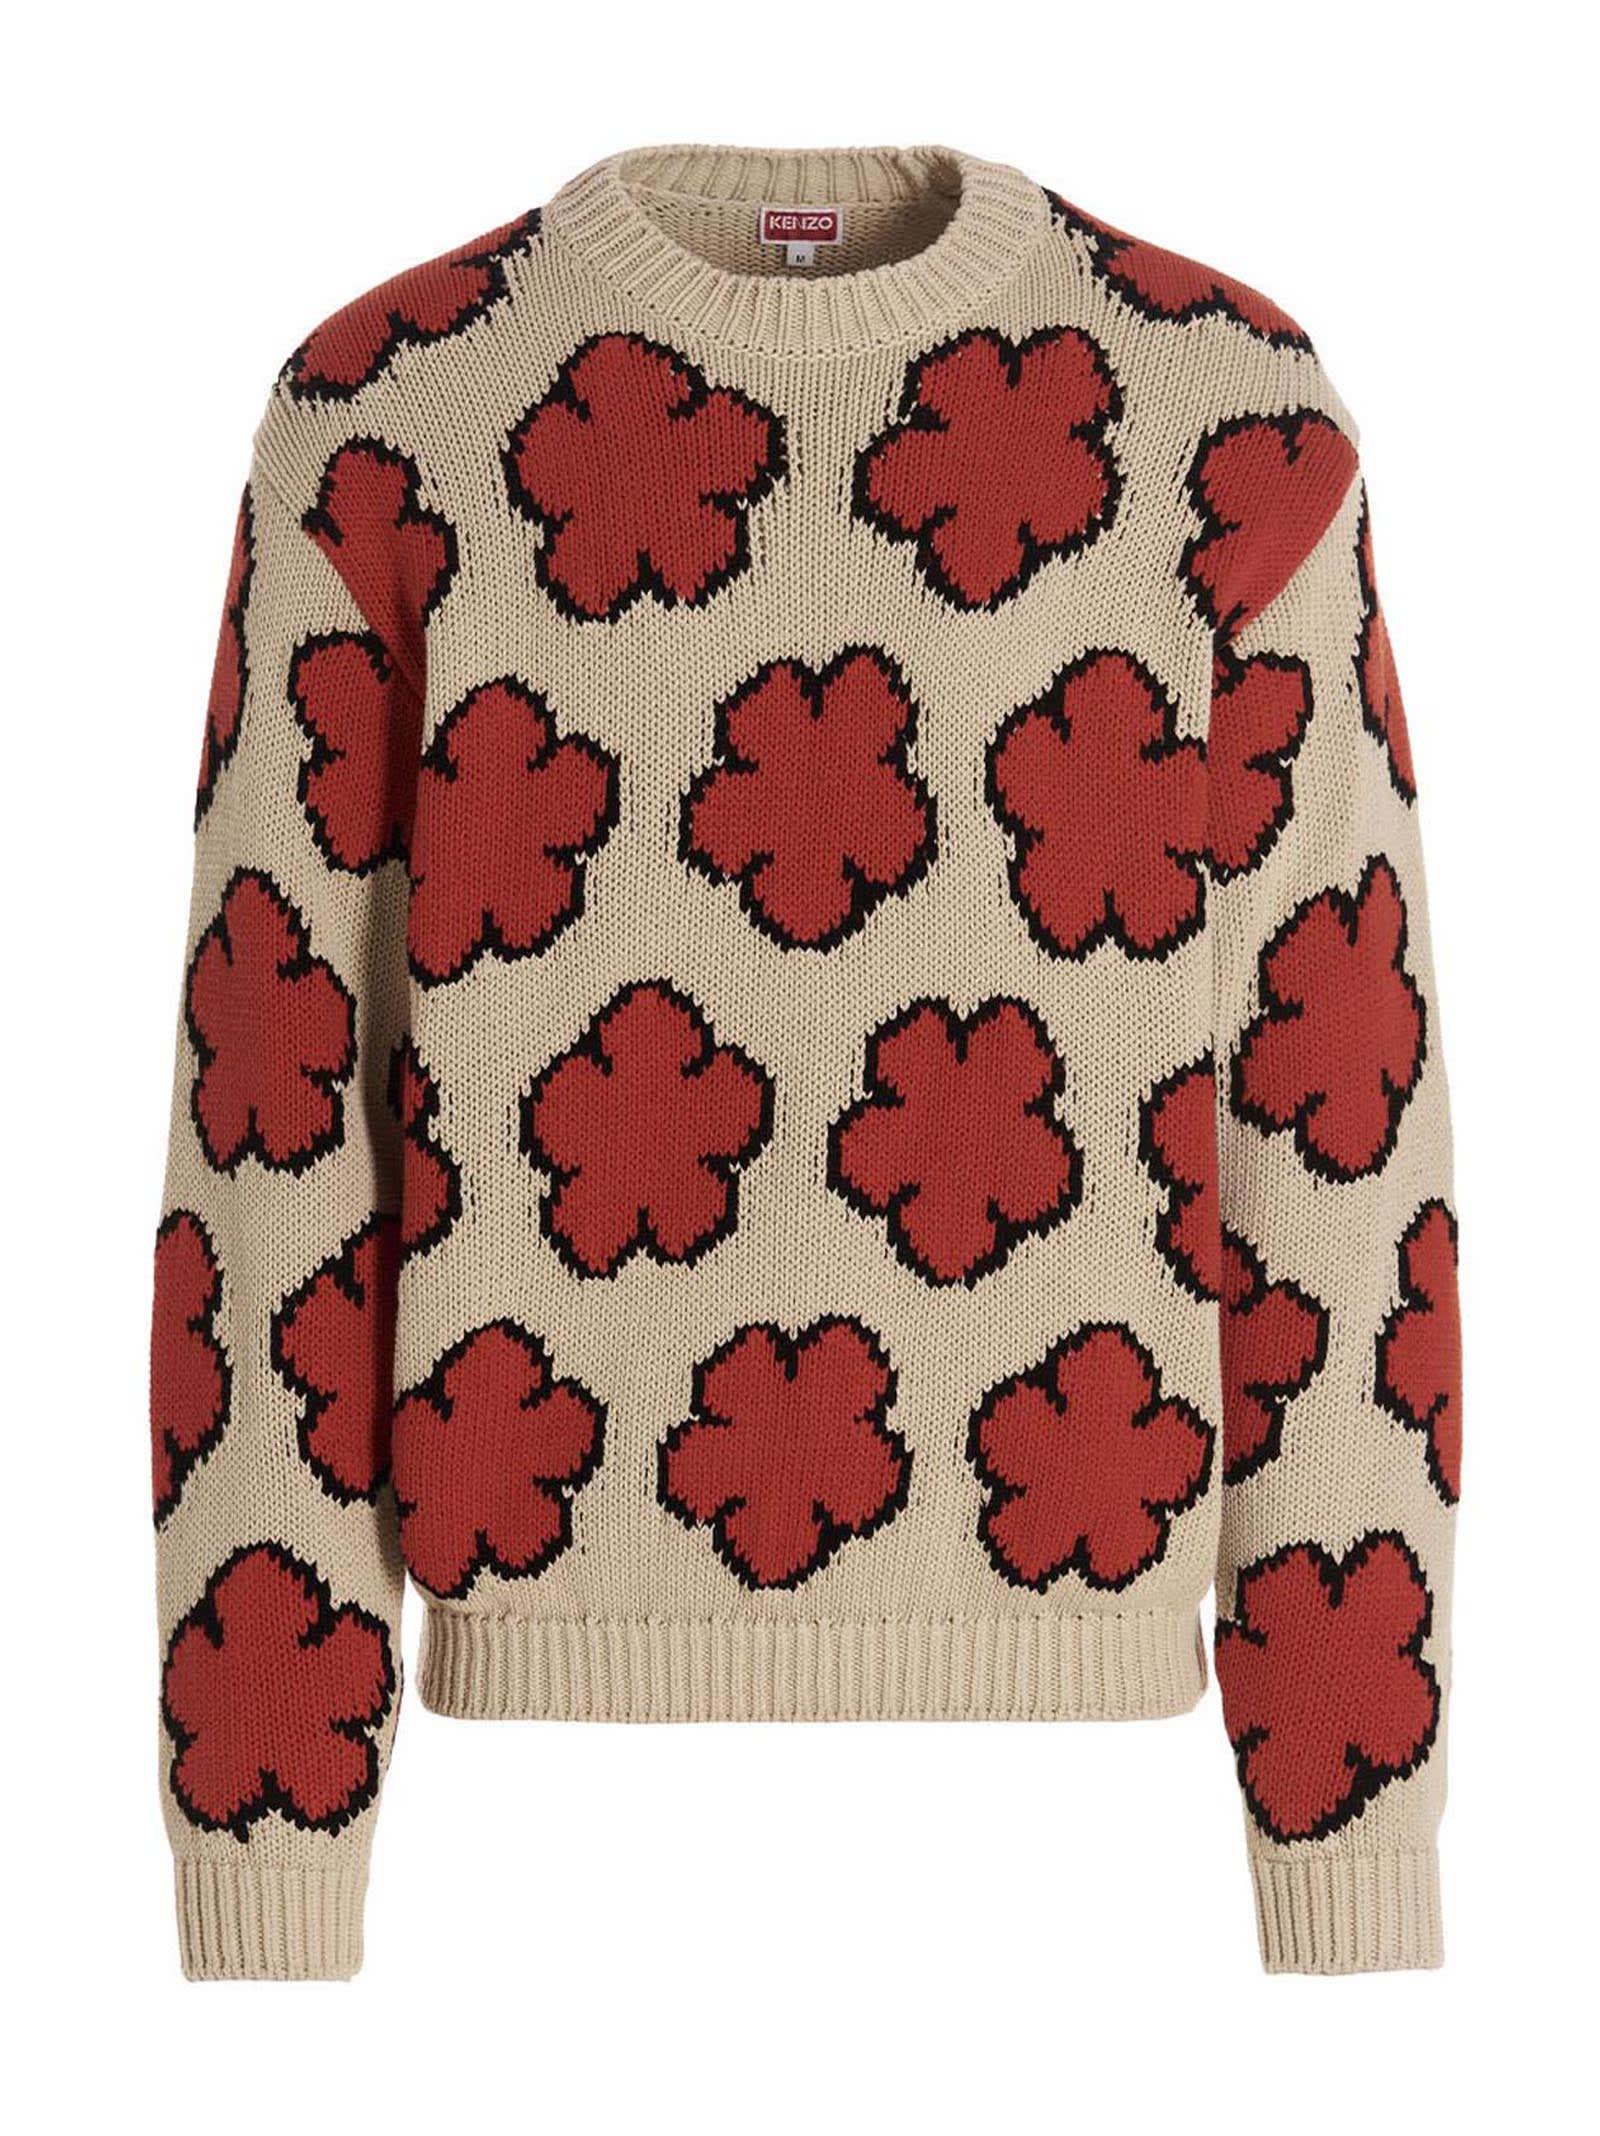 KENZO All-over Boke Flower Sweater in Red for Men | Lyst